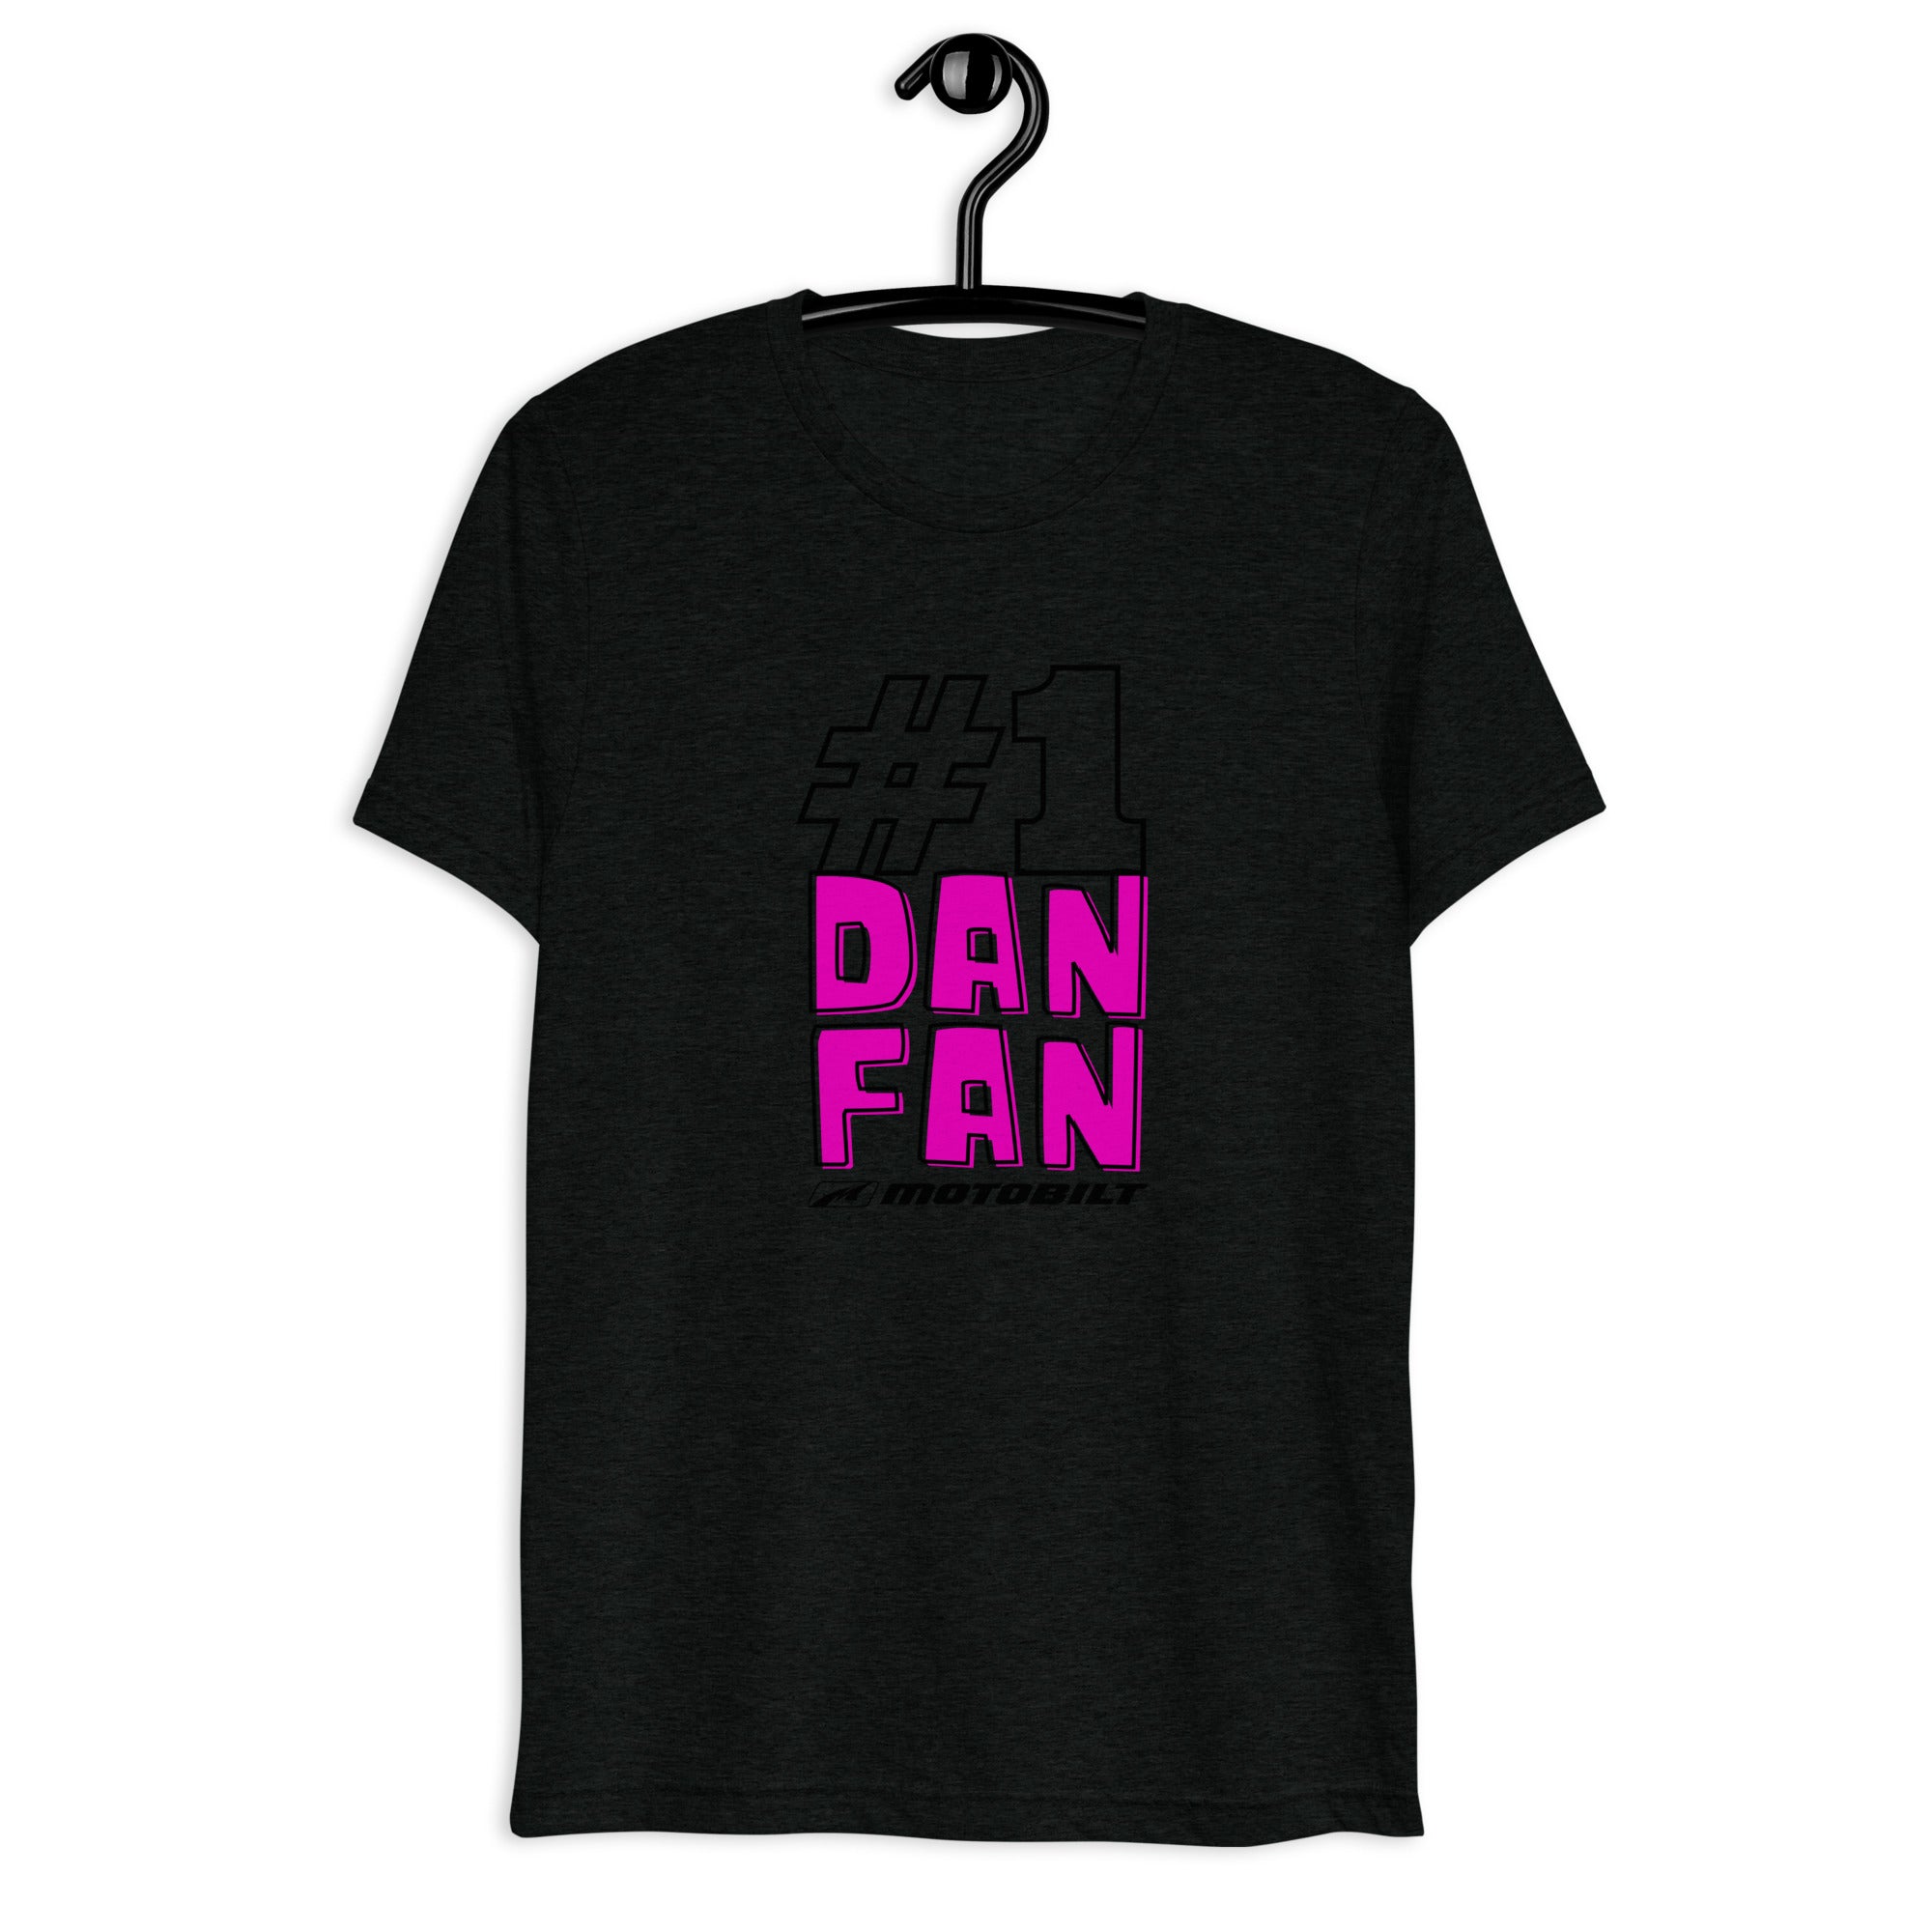 DanFan t-shirt - Motobilt